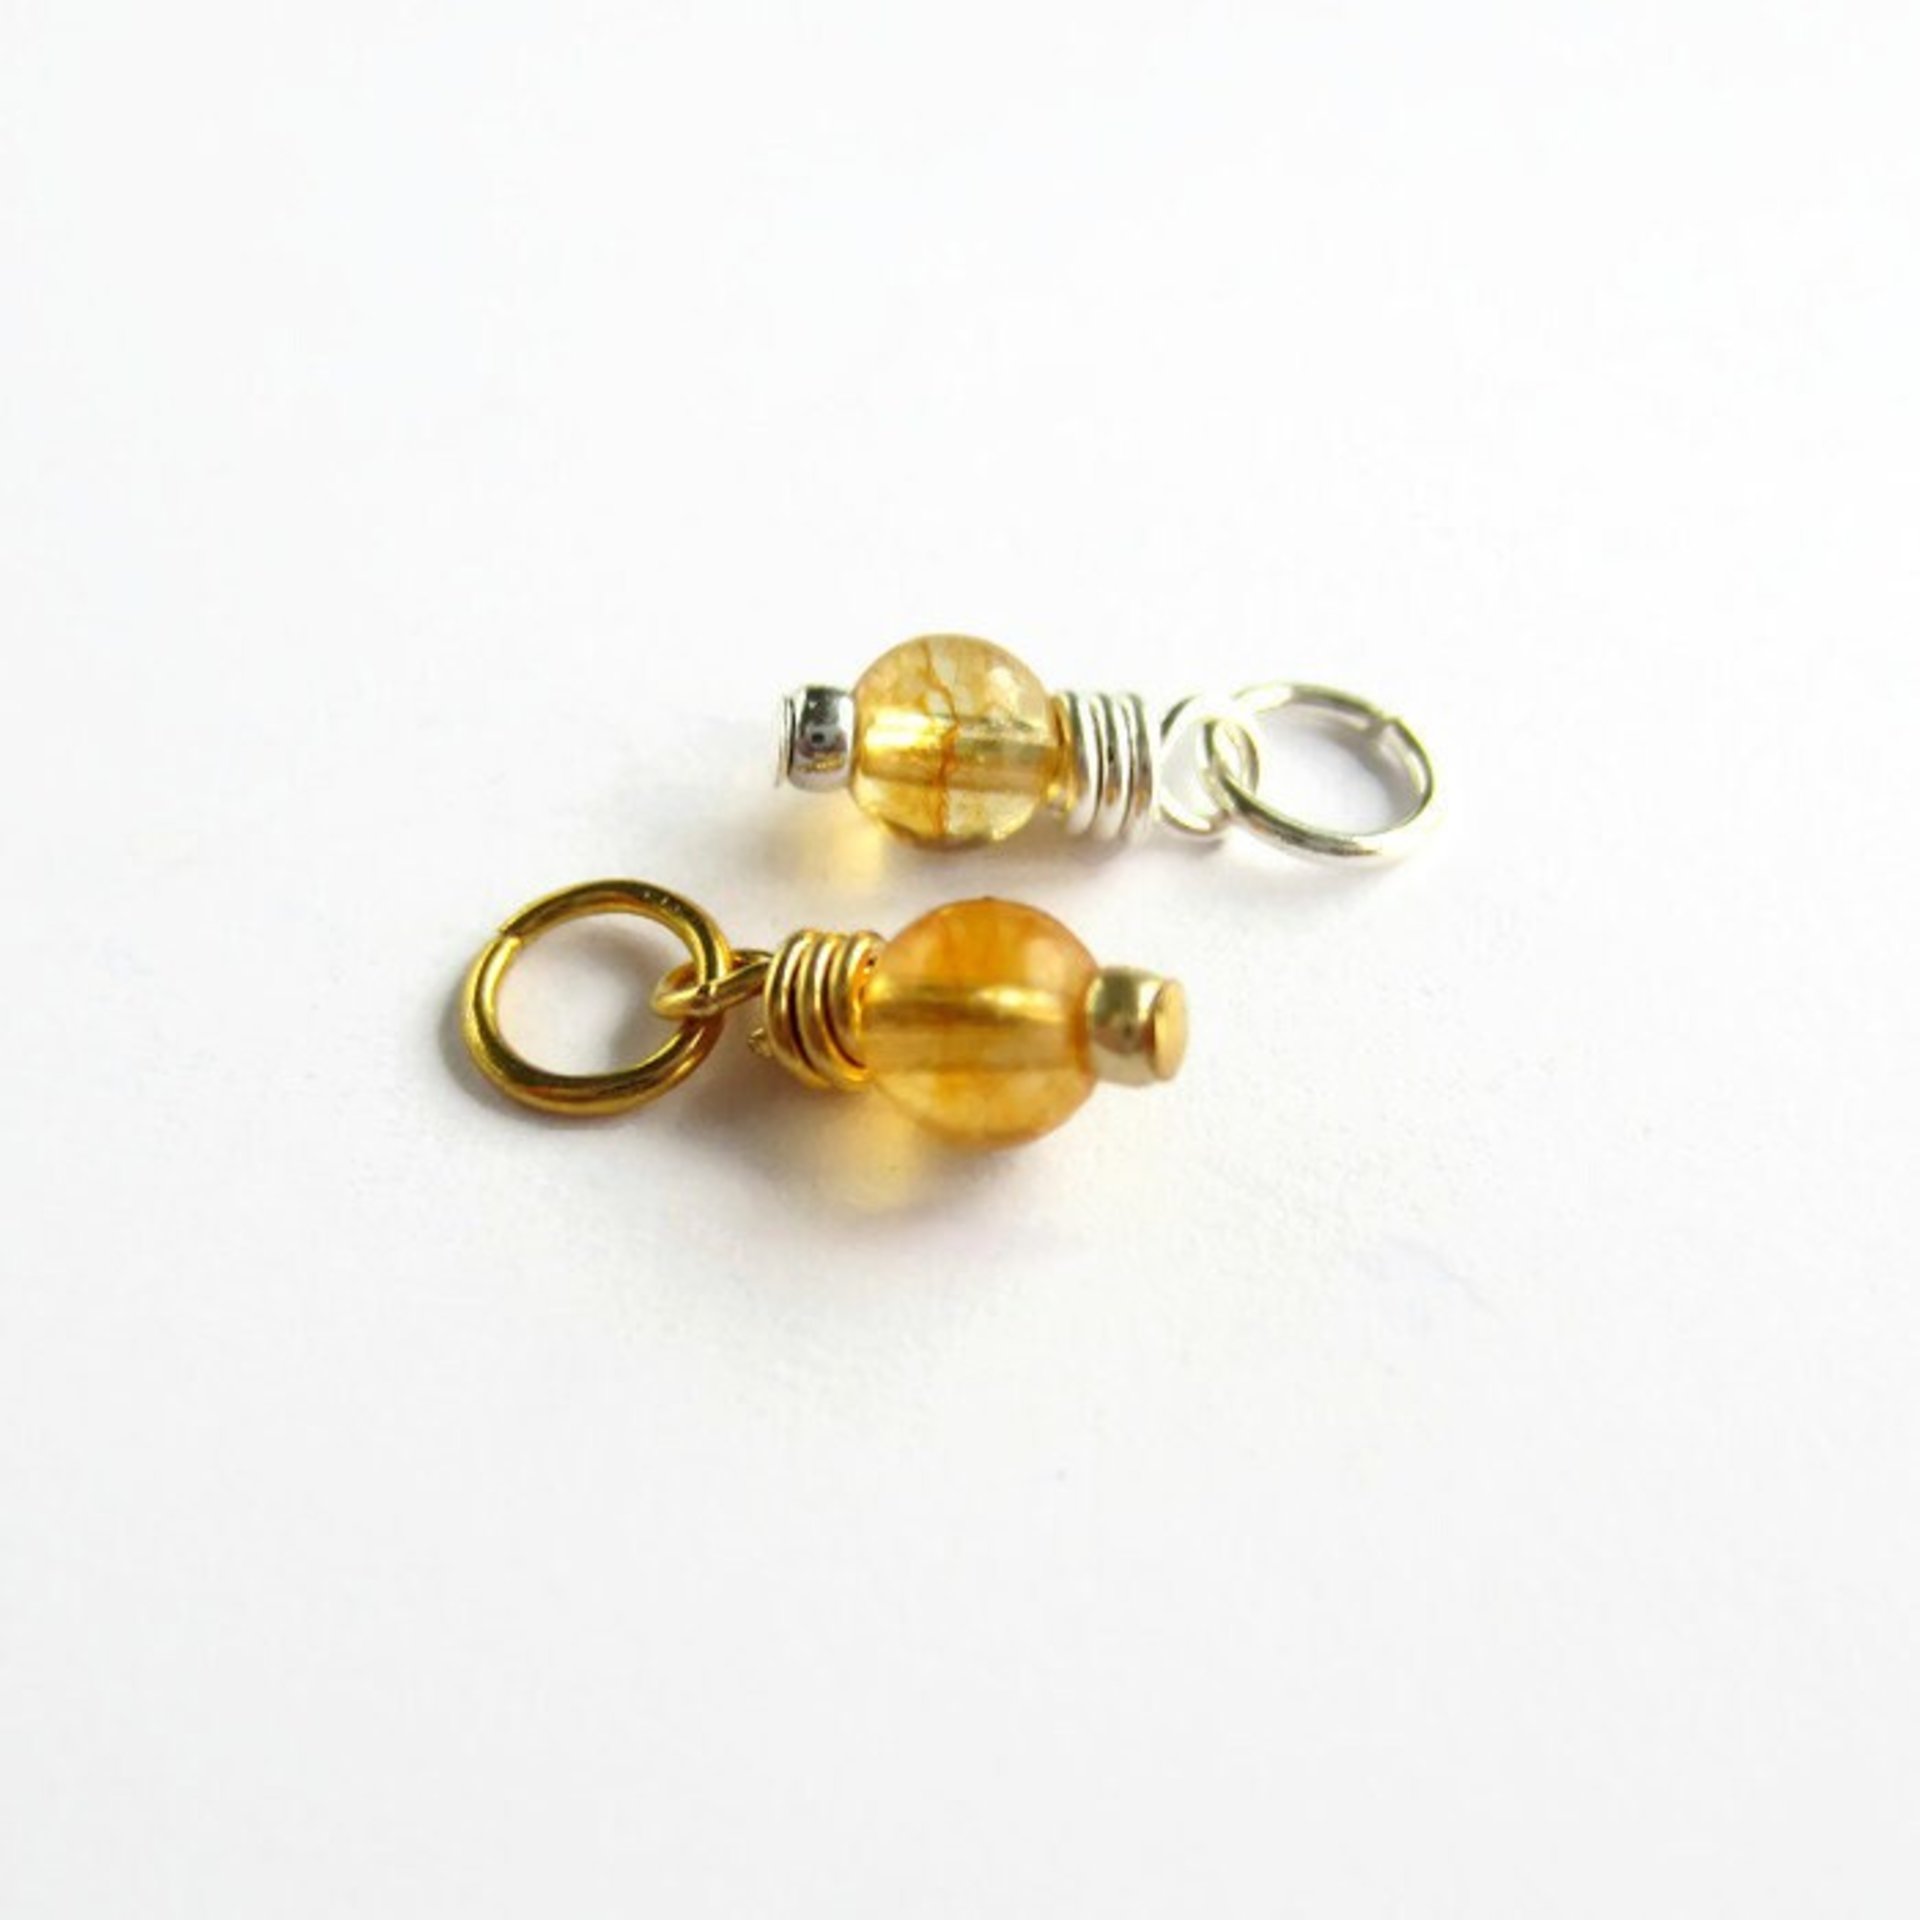 Citrine Gemstone Charm ~ November Birthstone ~ Handmade by The Tiny Tree Frog Jewellery